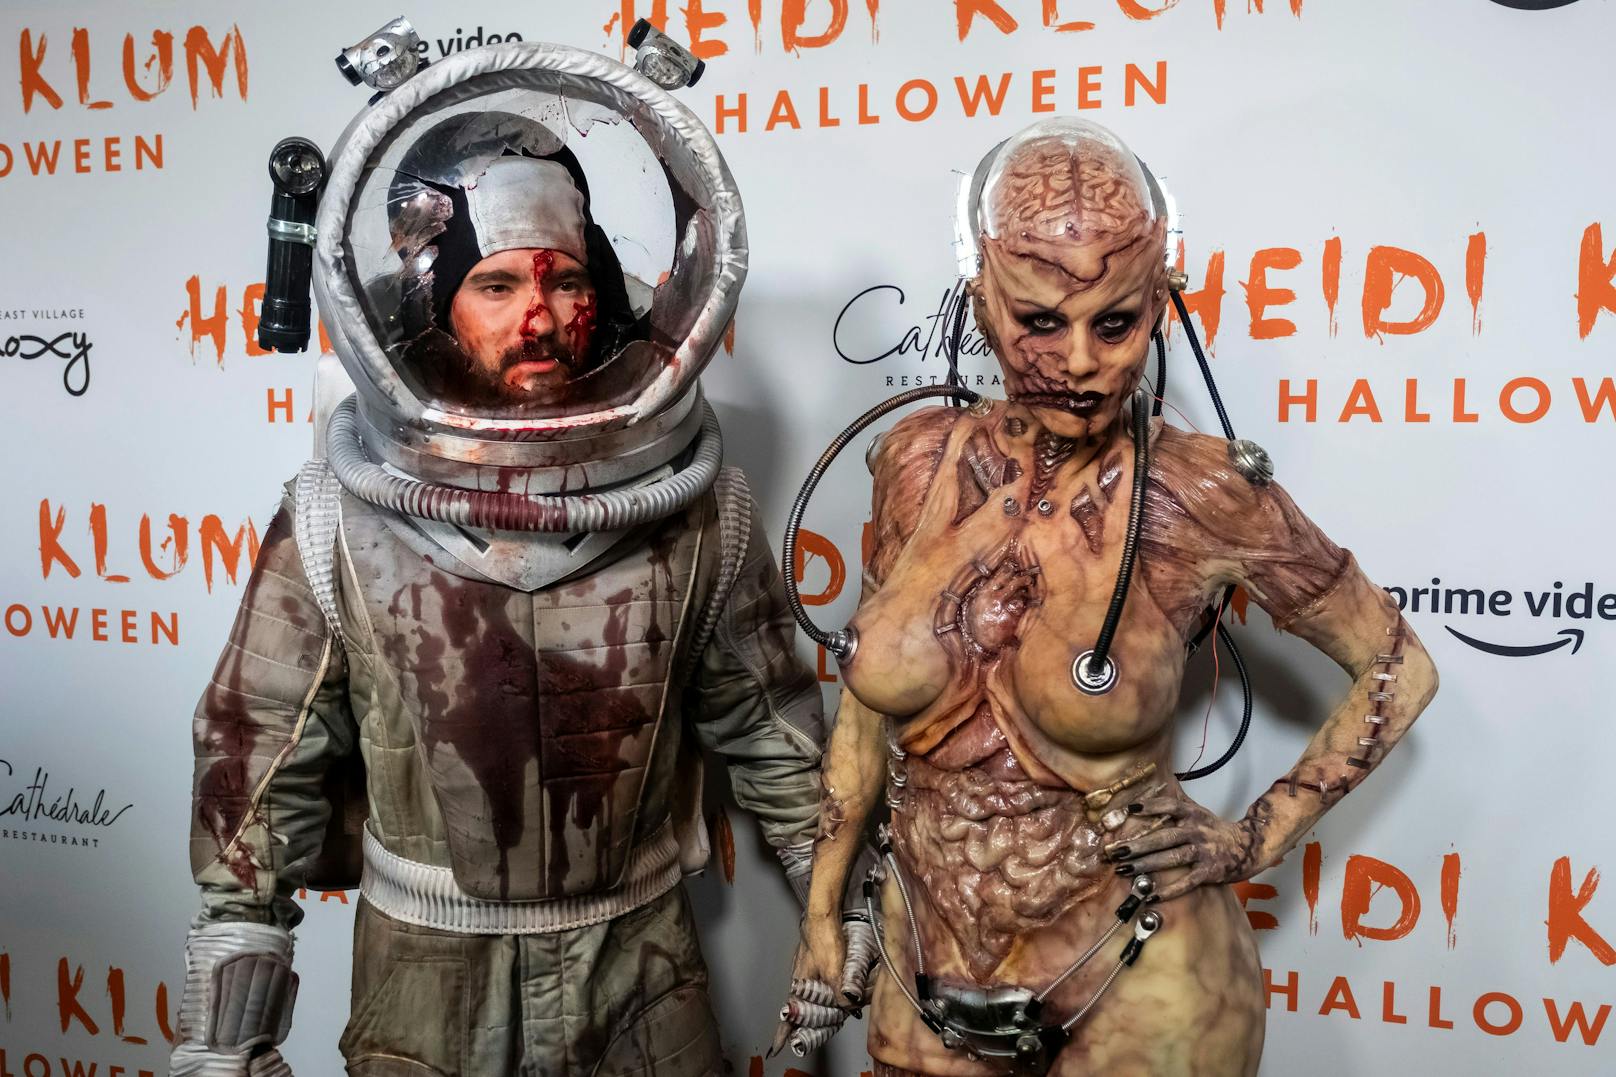 Heidi Klum verrät erste Details zu Halloween-Kostüm